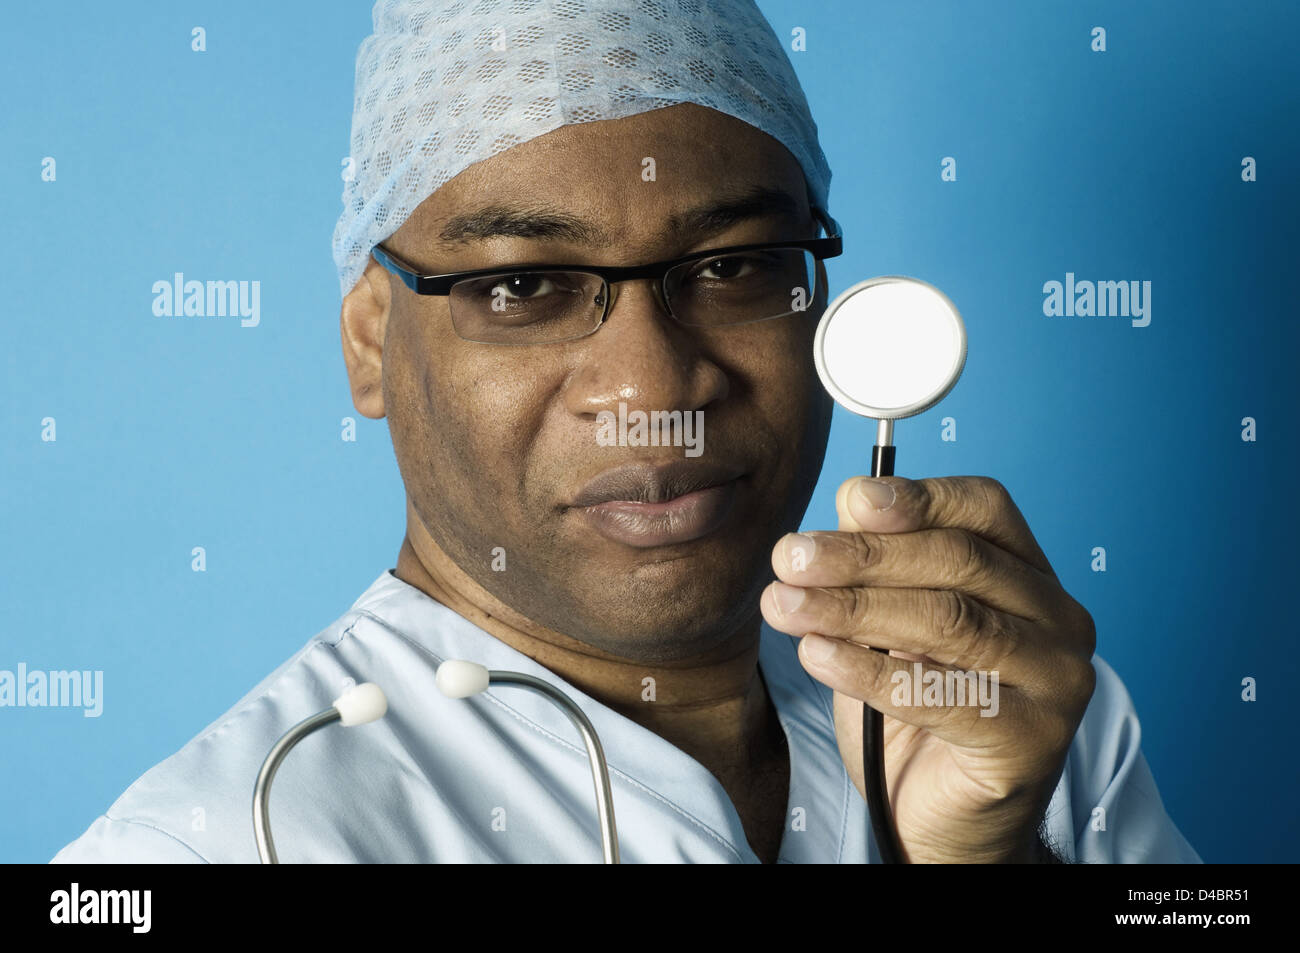 Portrait of surgeon in scrubs holding stethoscope Stock Photo